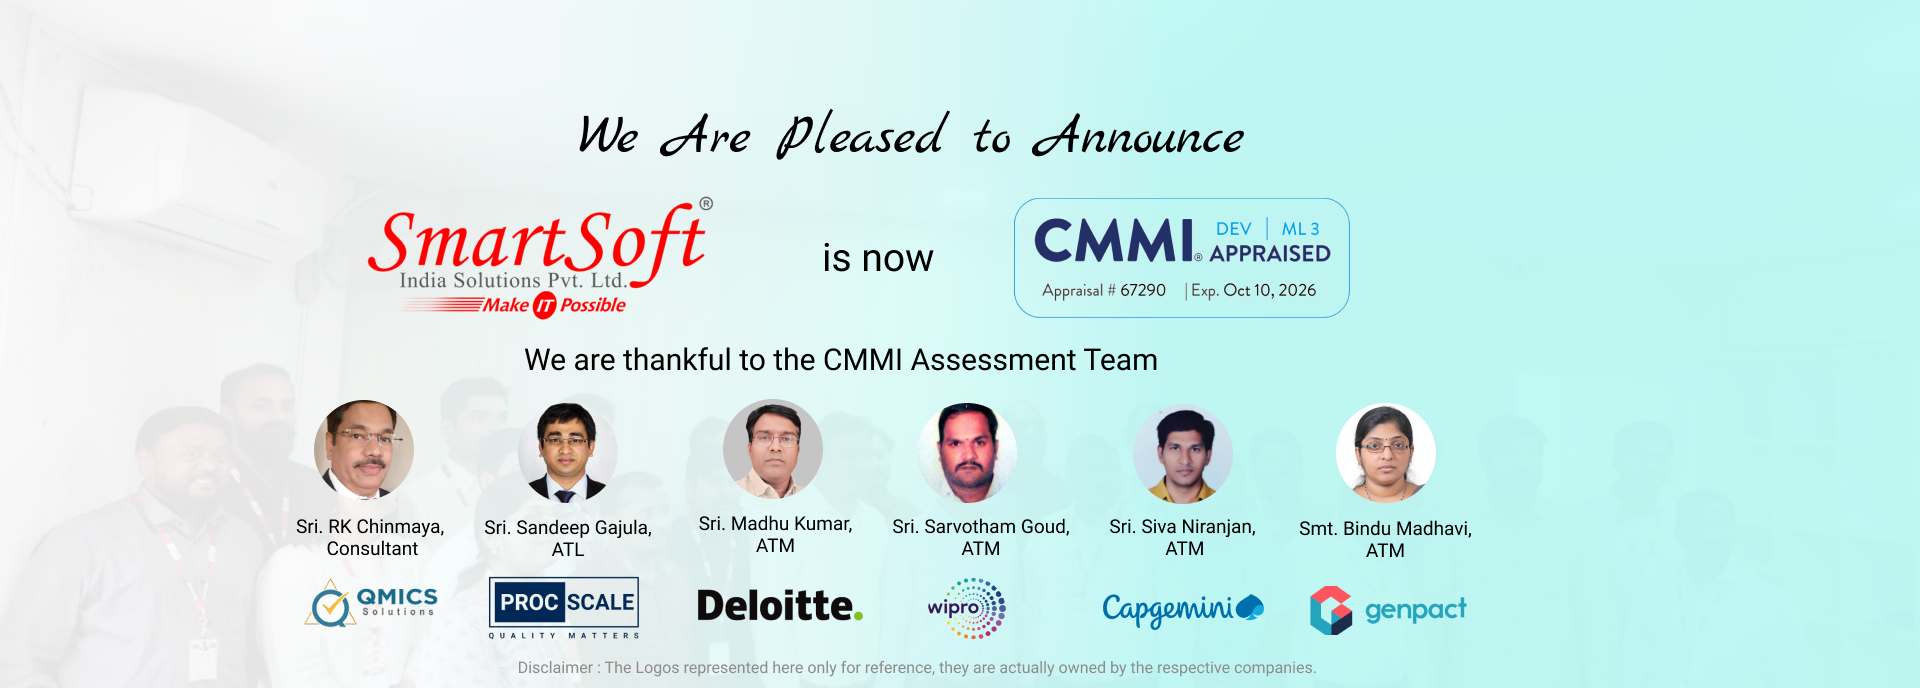 Smartsoft India Solutions |  CMMI ML3 